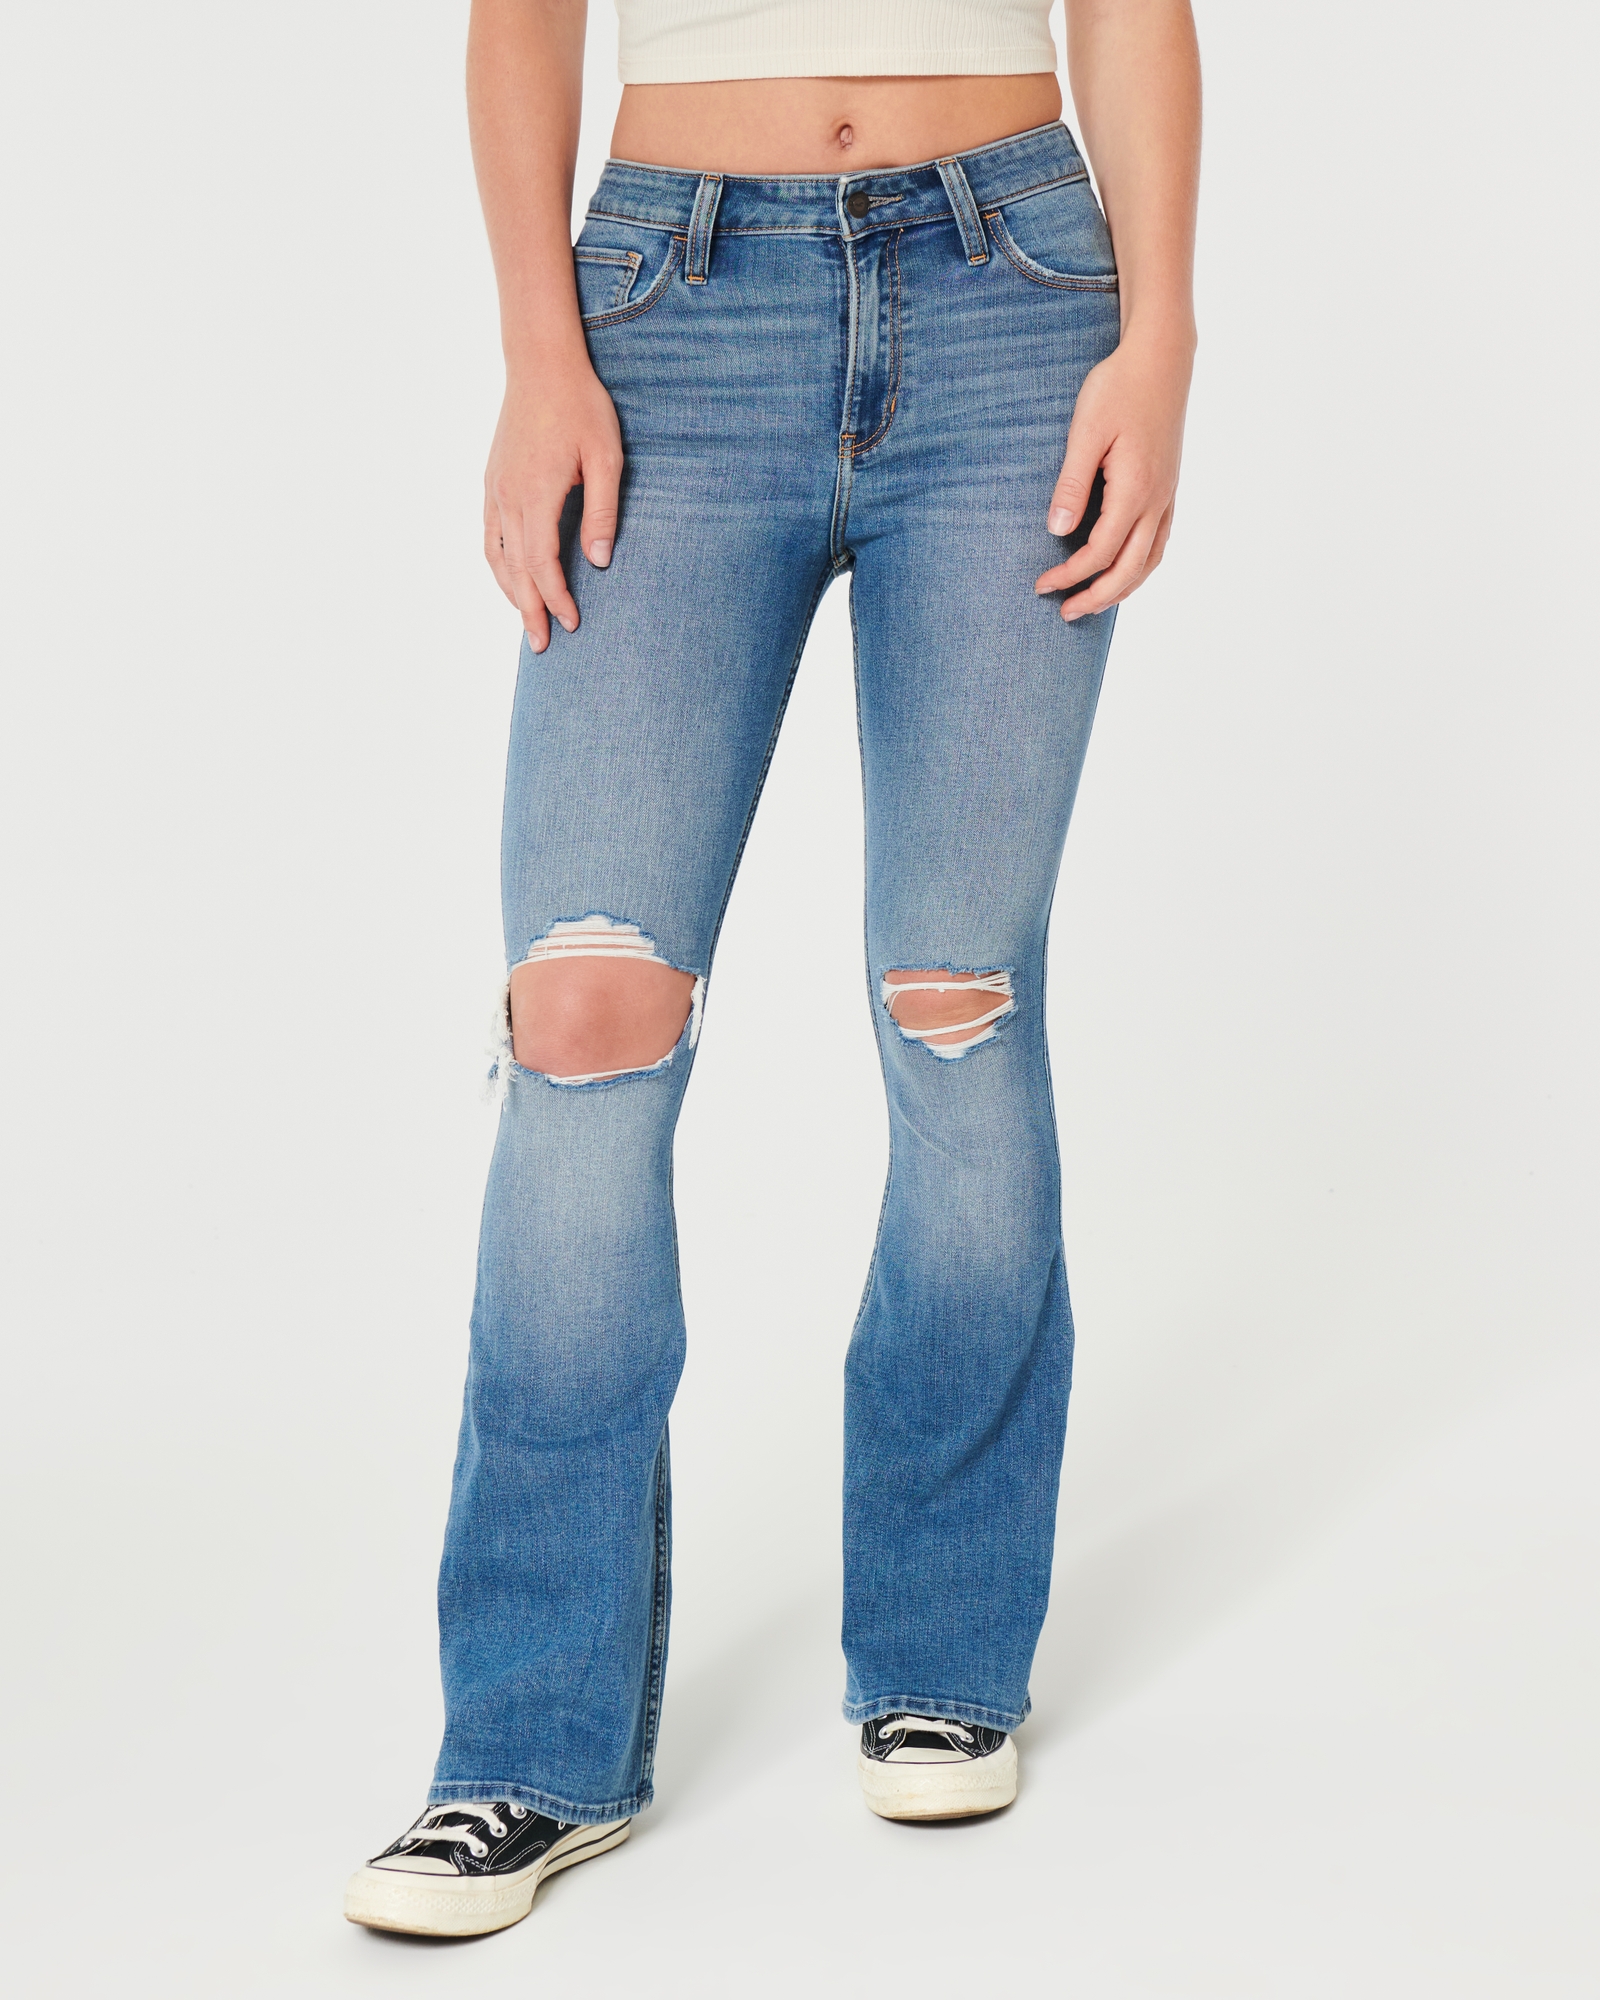 Hollister High Rise Black Split Hem Flare Jeans NWT Size 9S ( Short 29x30)